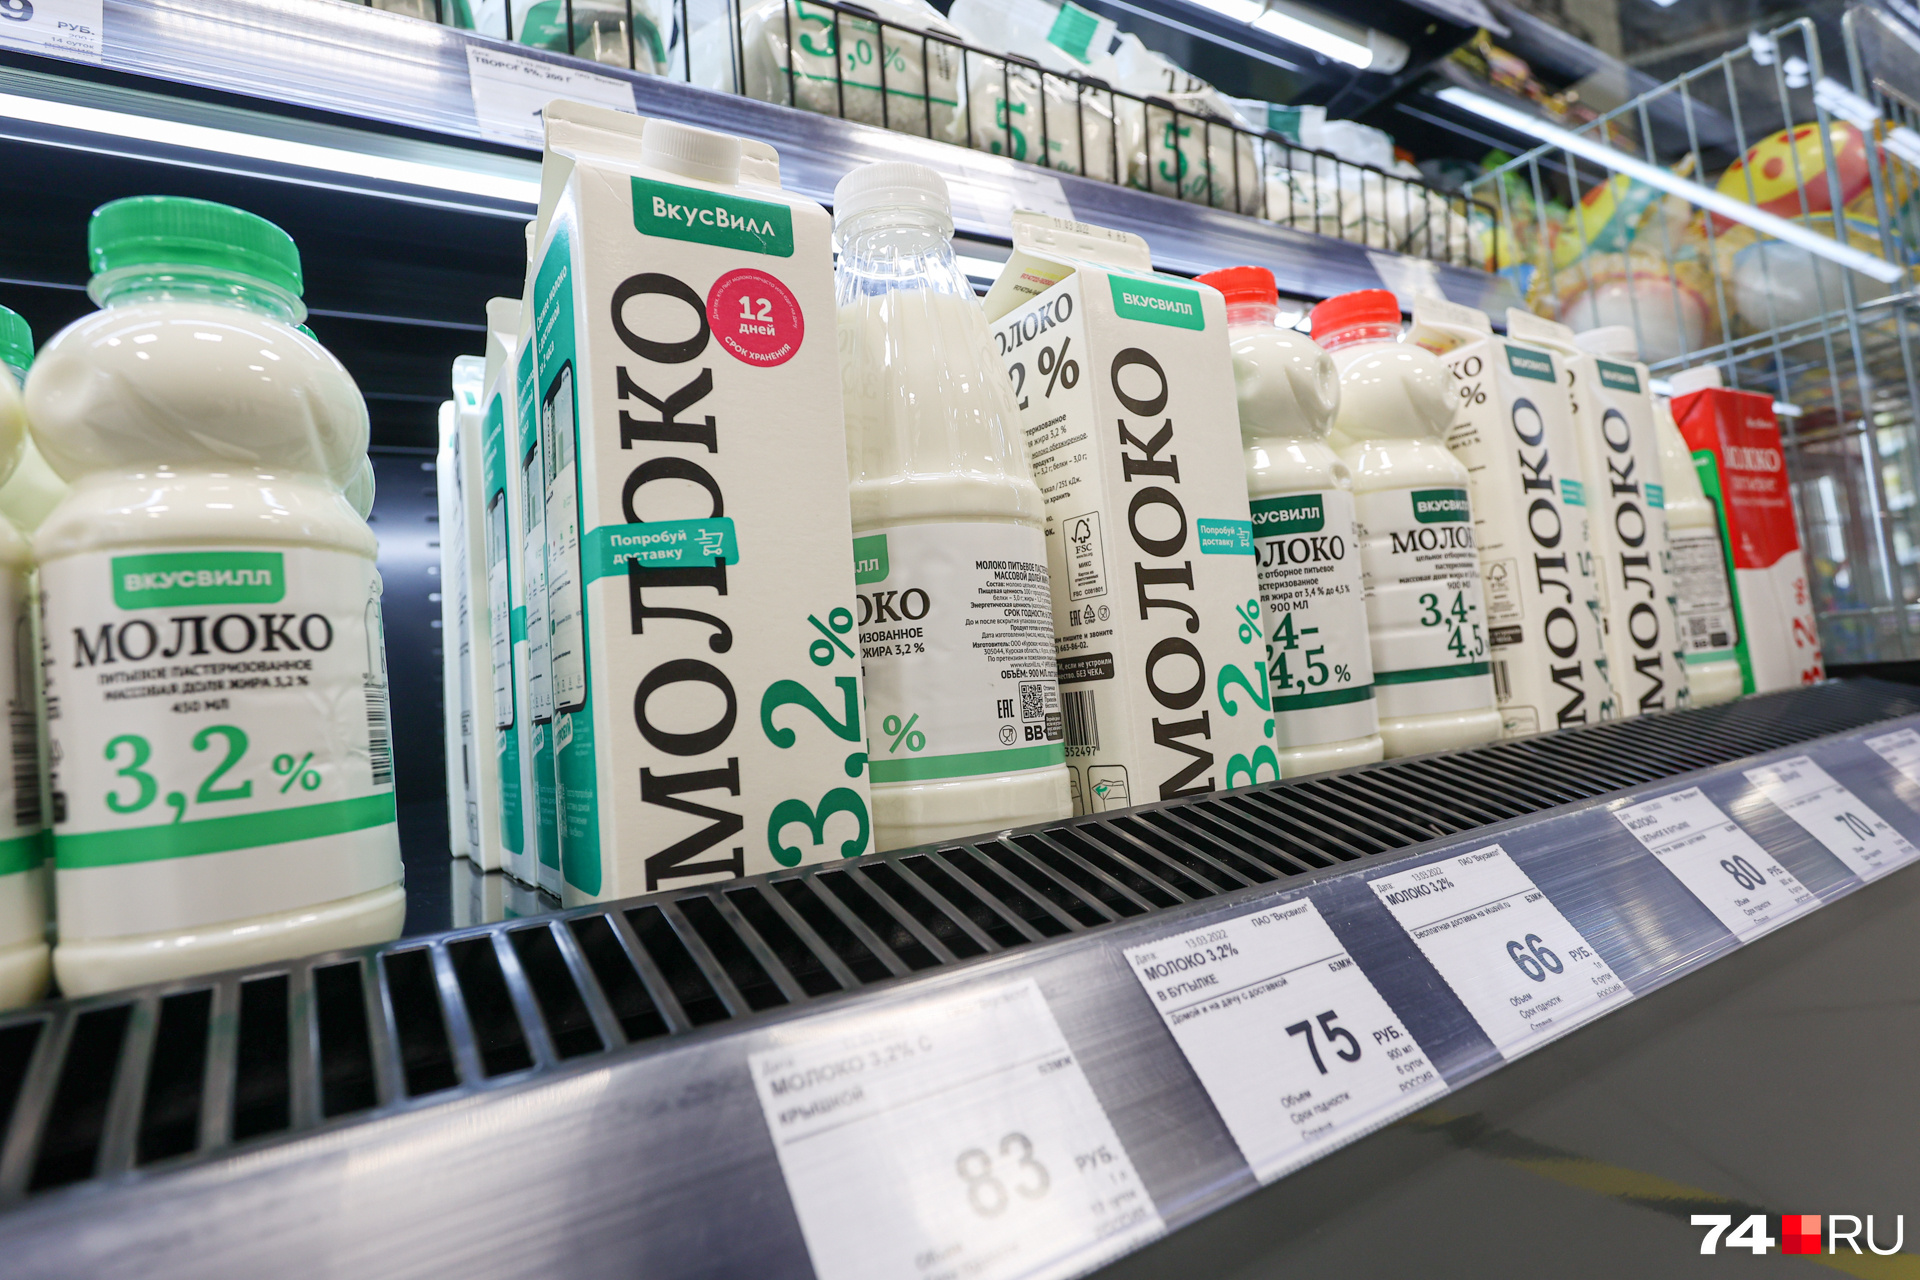 Срок хранения такого молока — 12 дней, цена — от 66 рублей